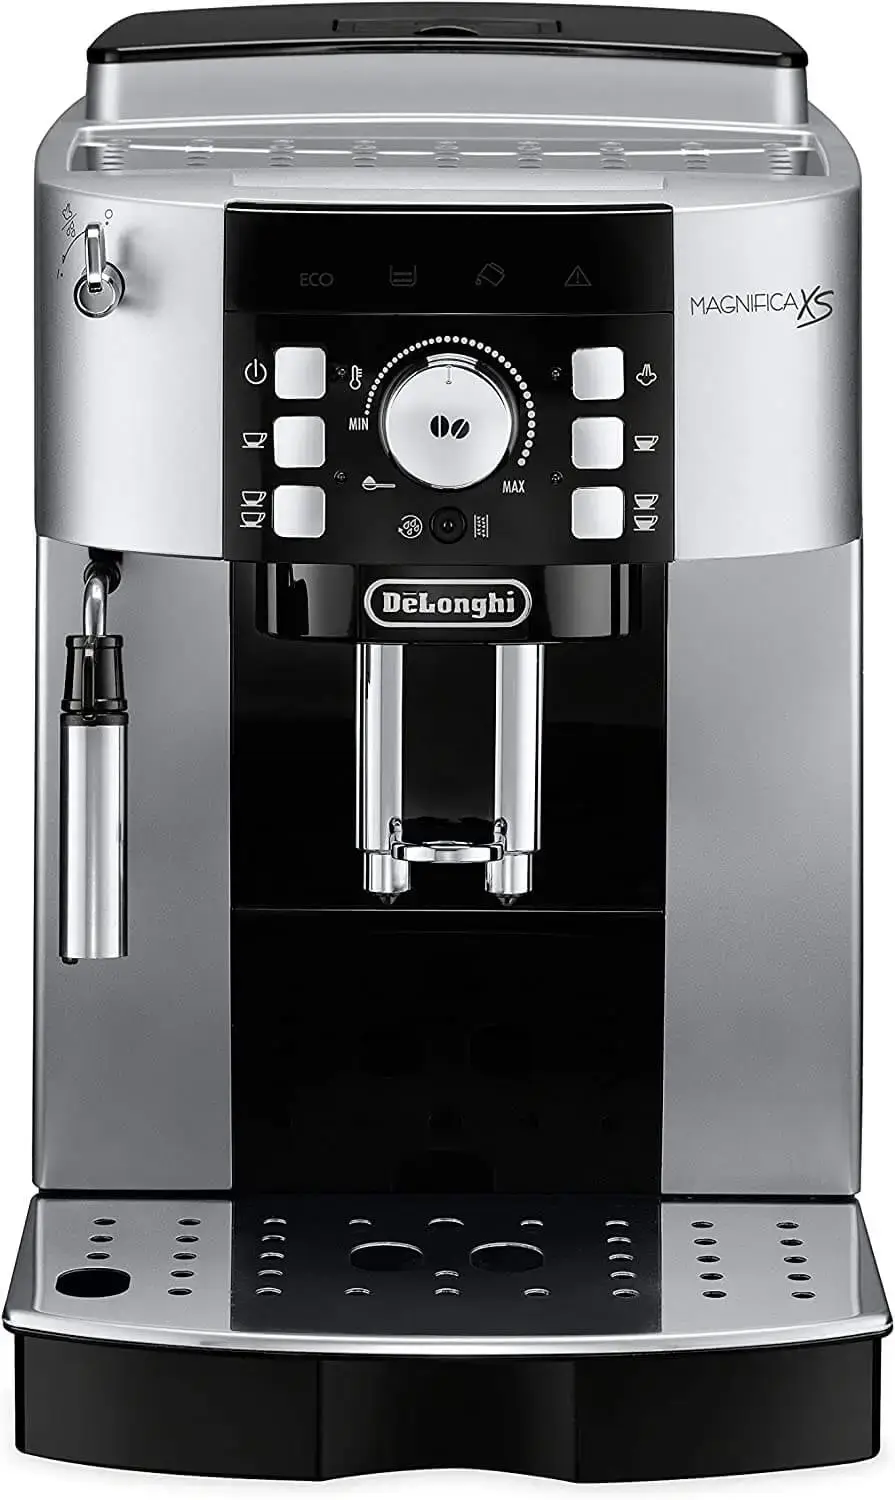 De'Longhi ECAM22110S Magnifica XS Fully Automatic Espresso Machine with Manual Cappuccino System